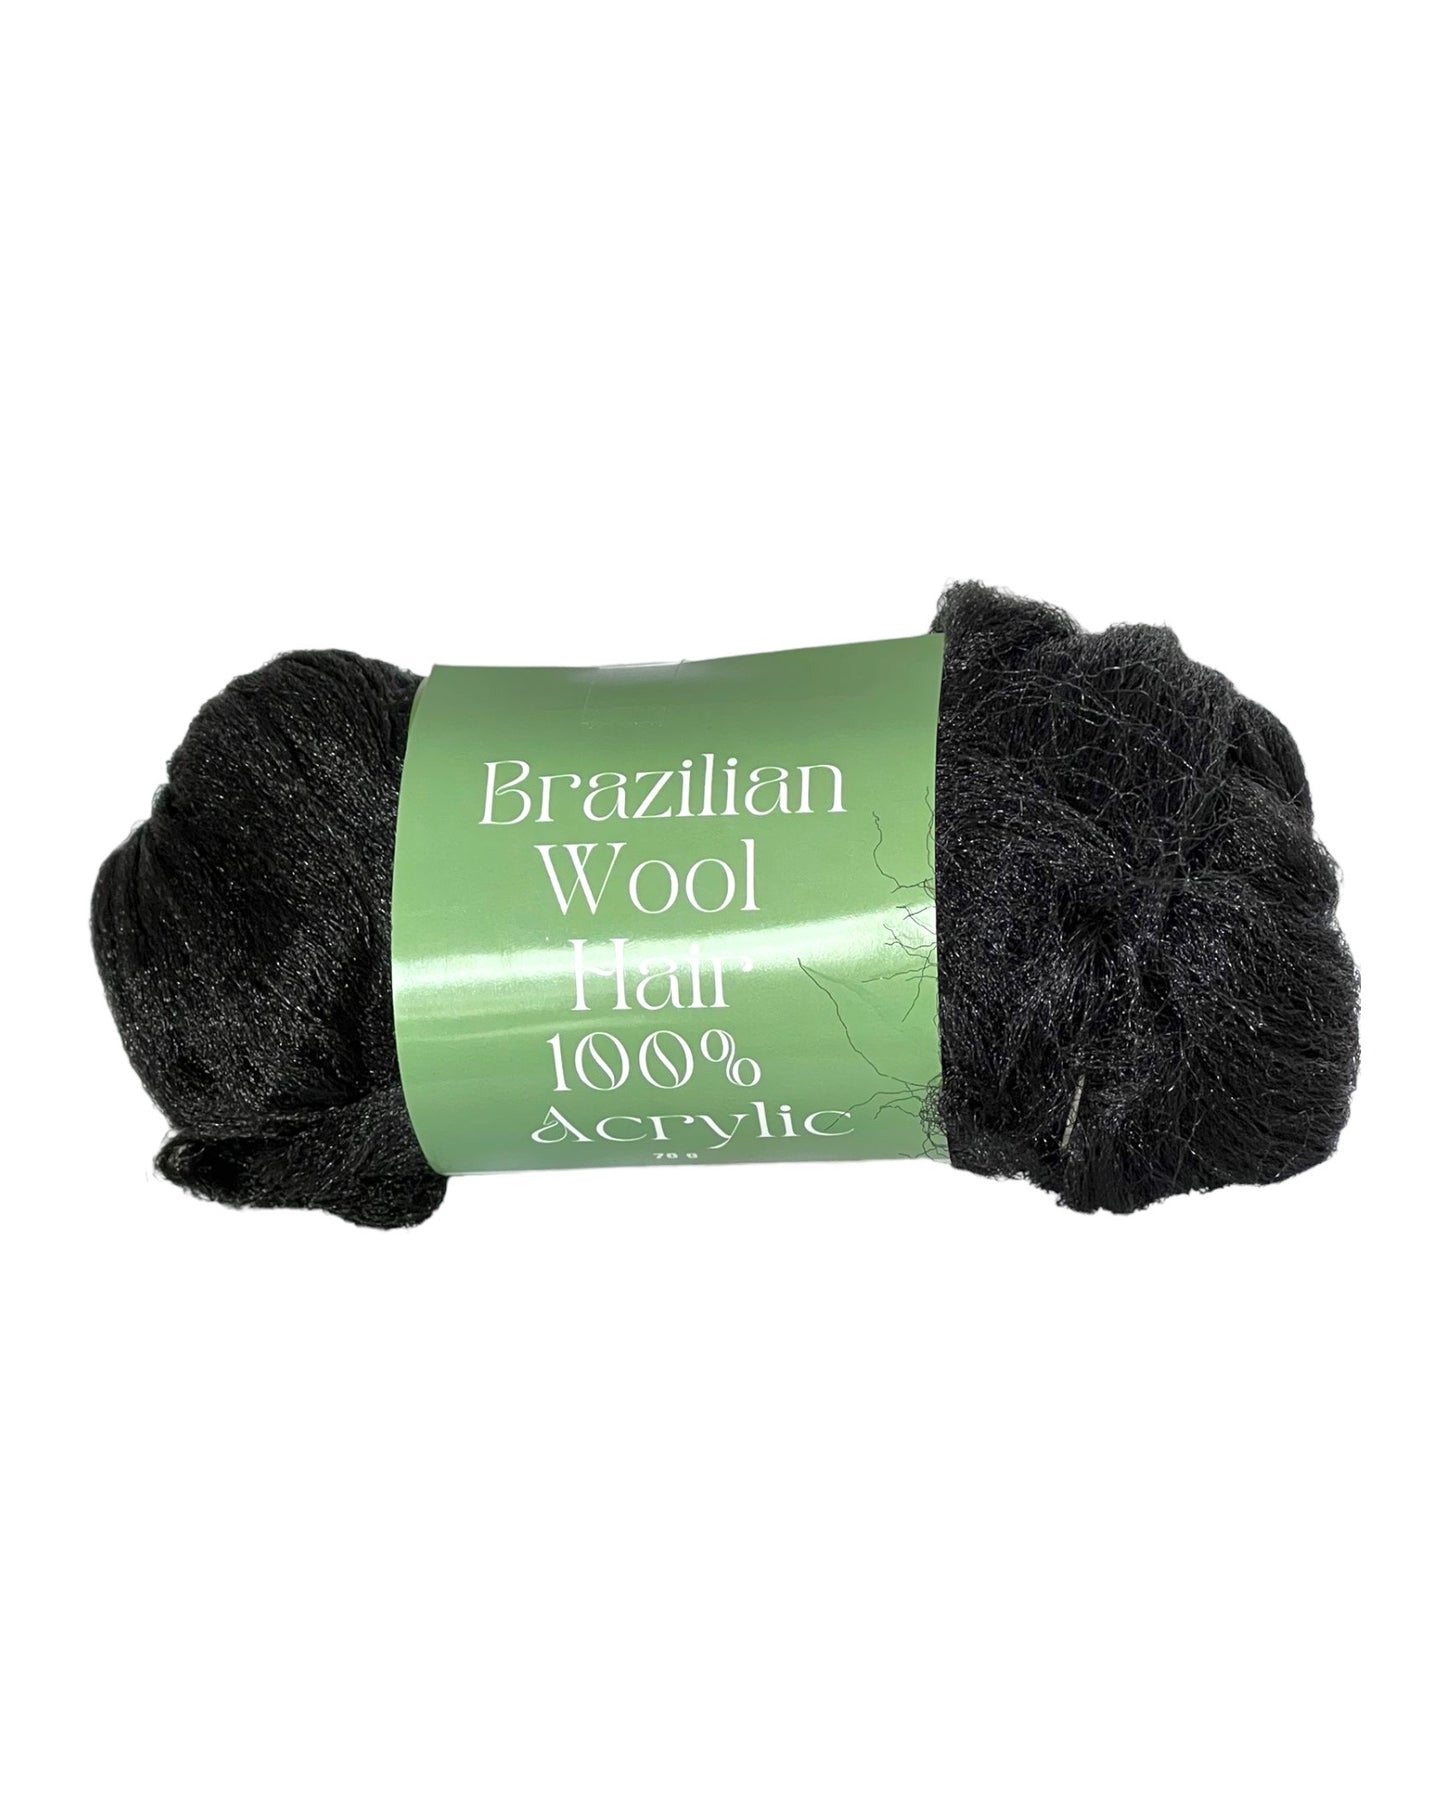 Brazilian Wool For Hair